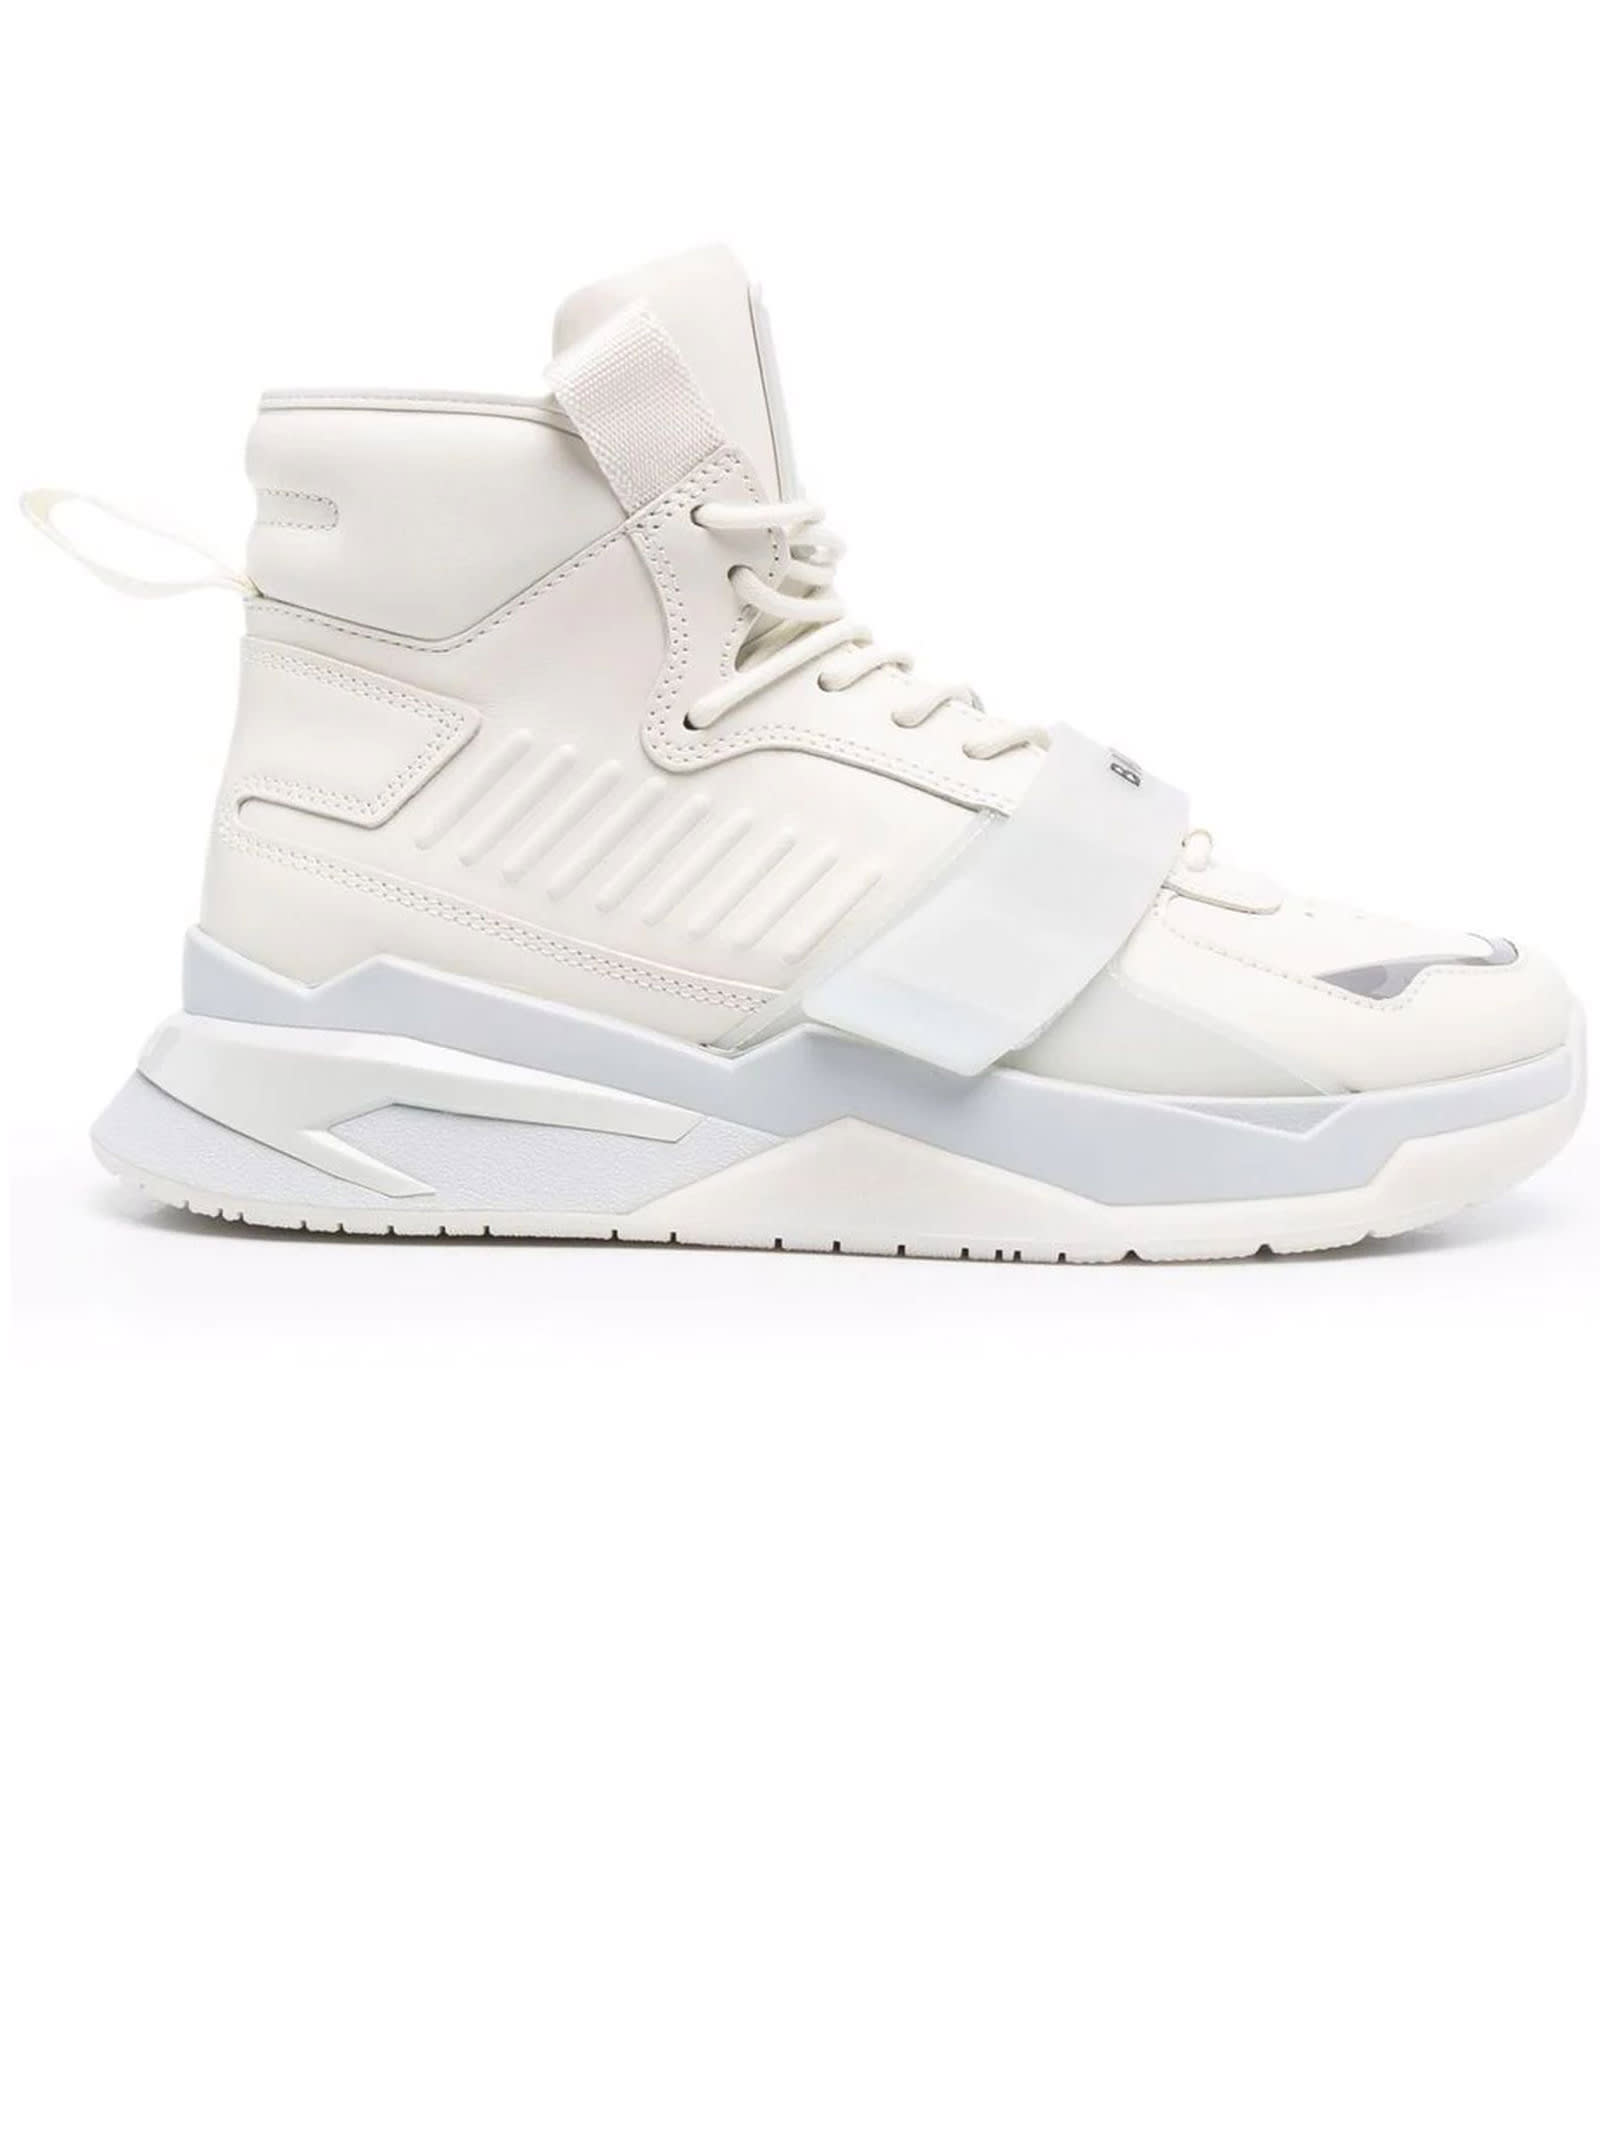 Balmain White Leather B-ball Sneakers